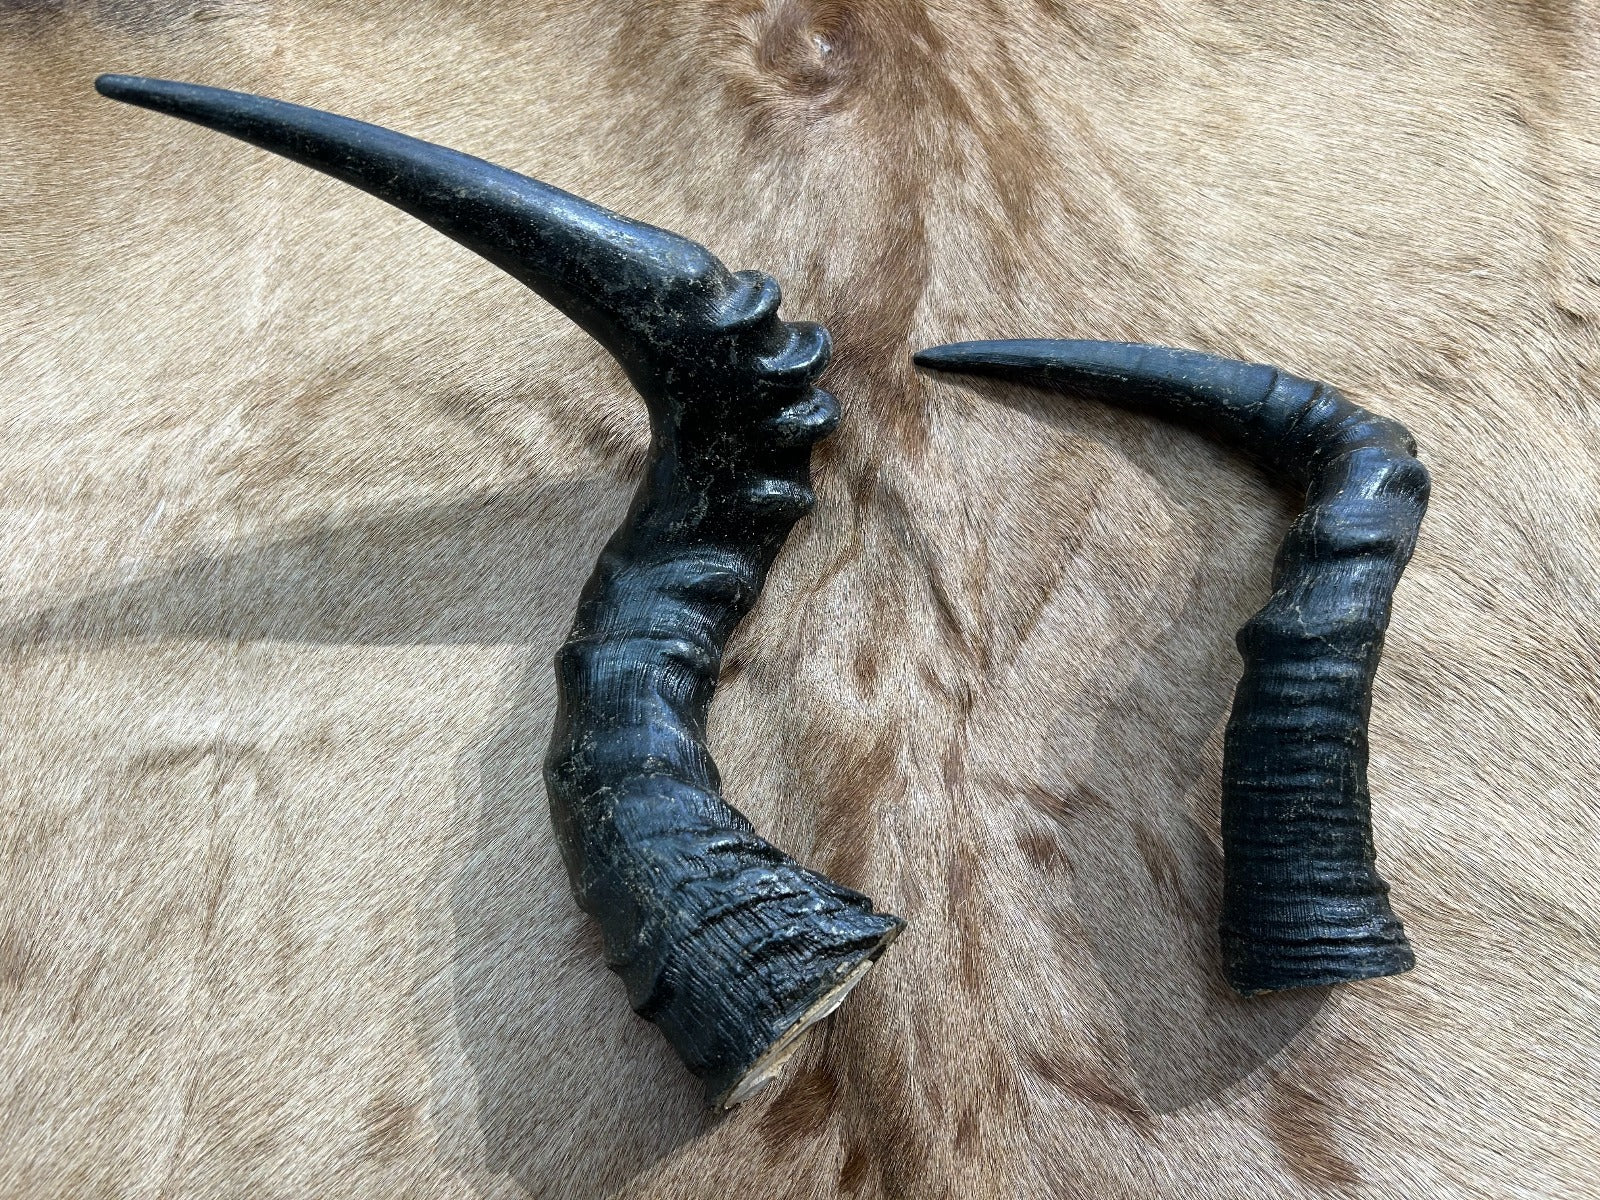 1 Red Hartebeest Horn, Antelope Horn, Antilope Horn, Deer Horn Average Size: 19 to 21 inches long